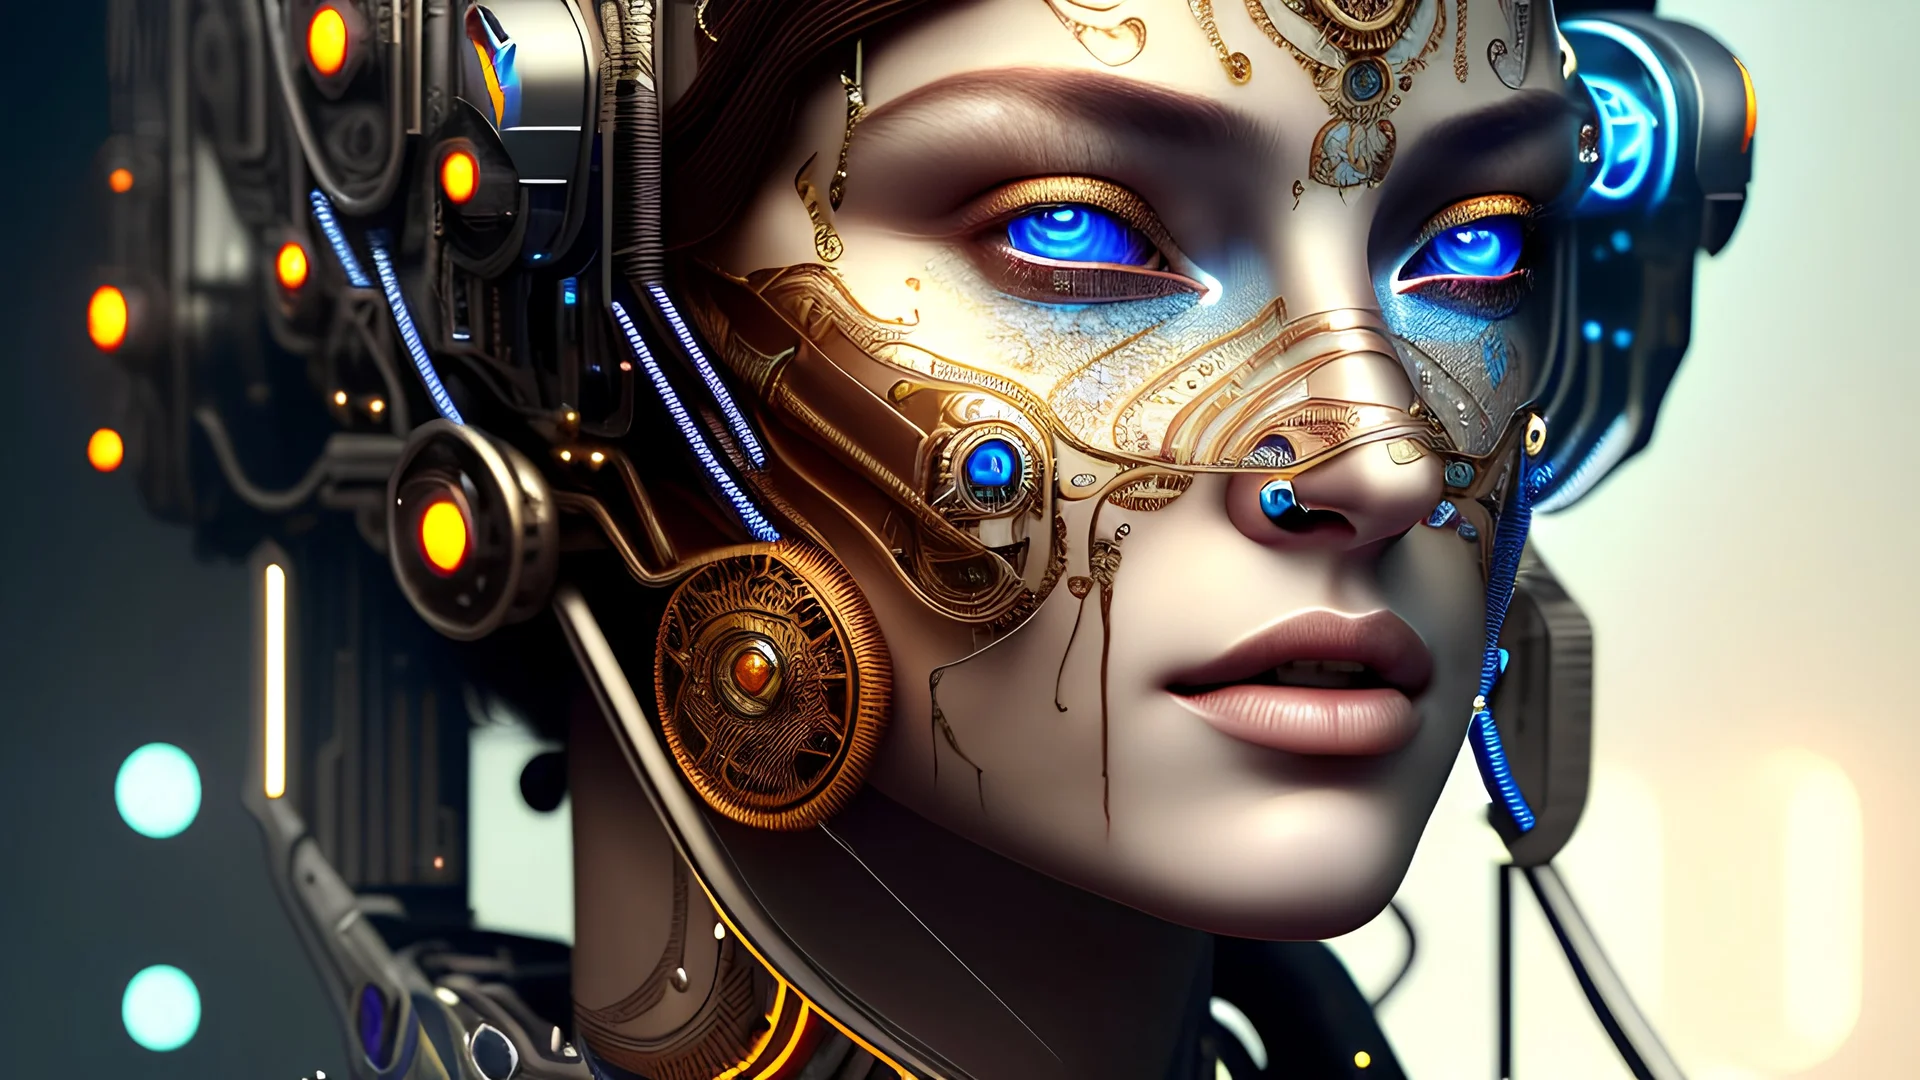 cyborg| portrait| detailed face| symmetric| realistic eyes| steampunk| cyberpunk| cyborg| intricate detailed| to scale| hyperrealistic| dark lighting| digital art| concept art| salvador dali style